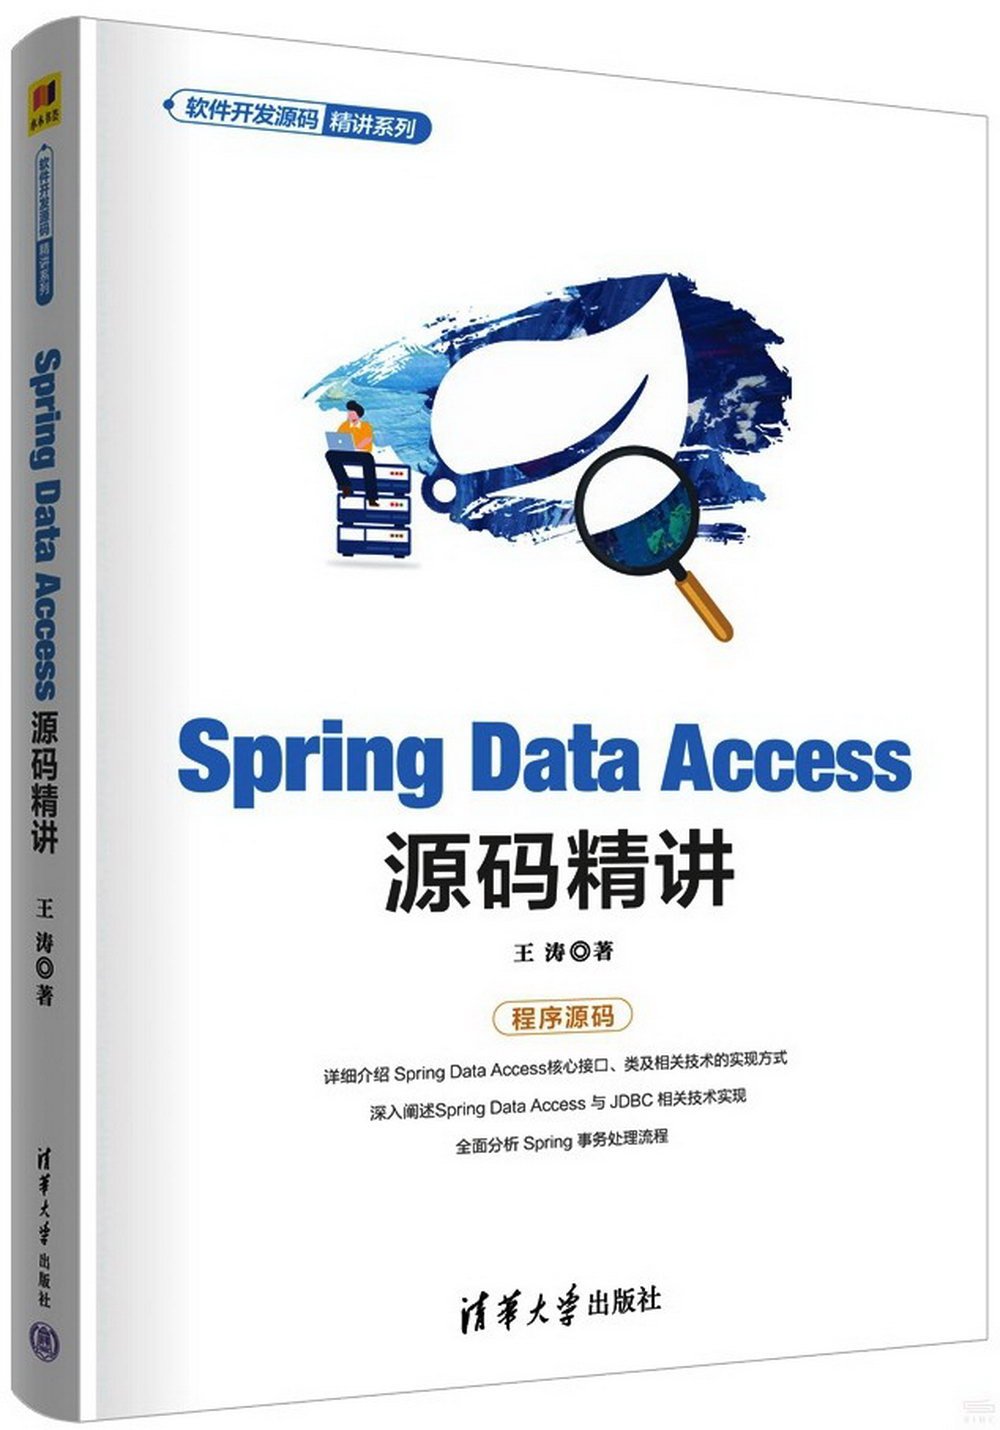 Spring Data Access源碼精講